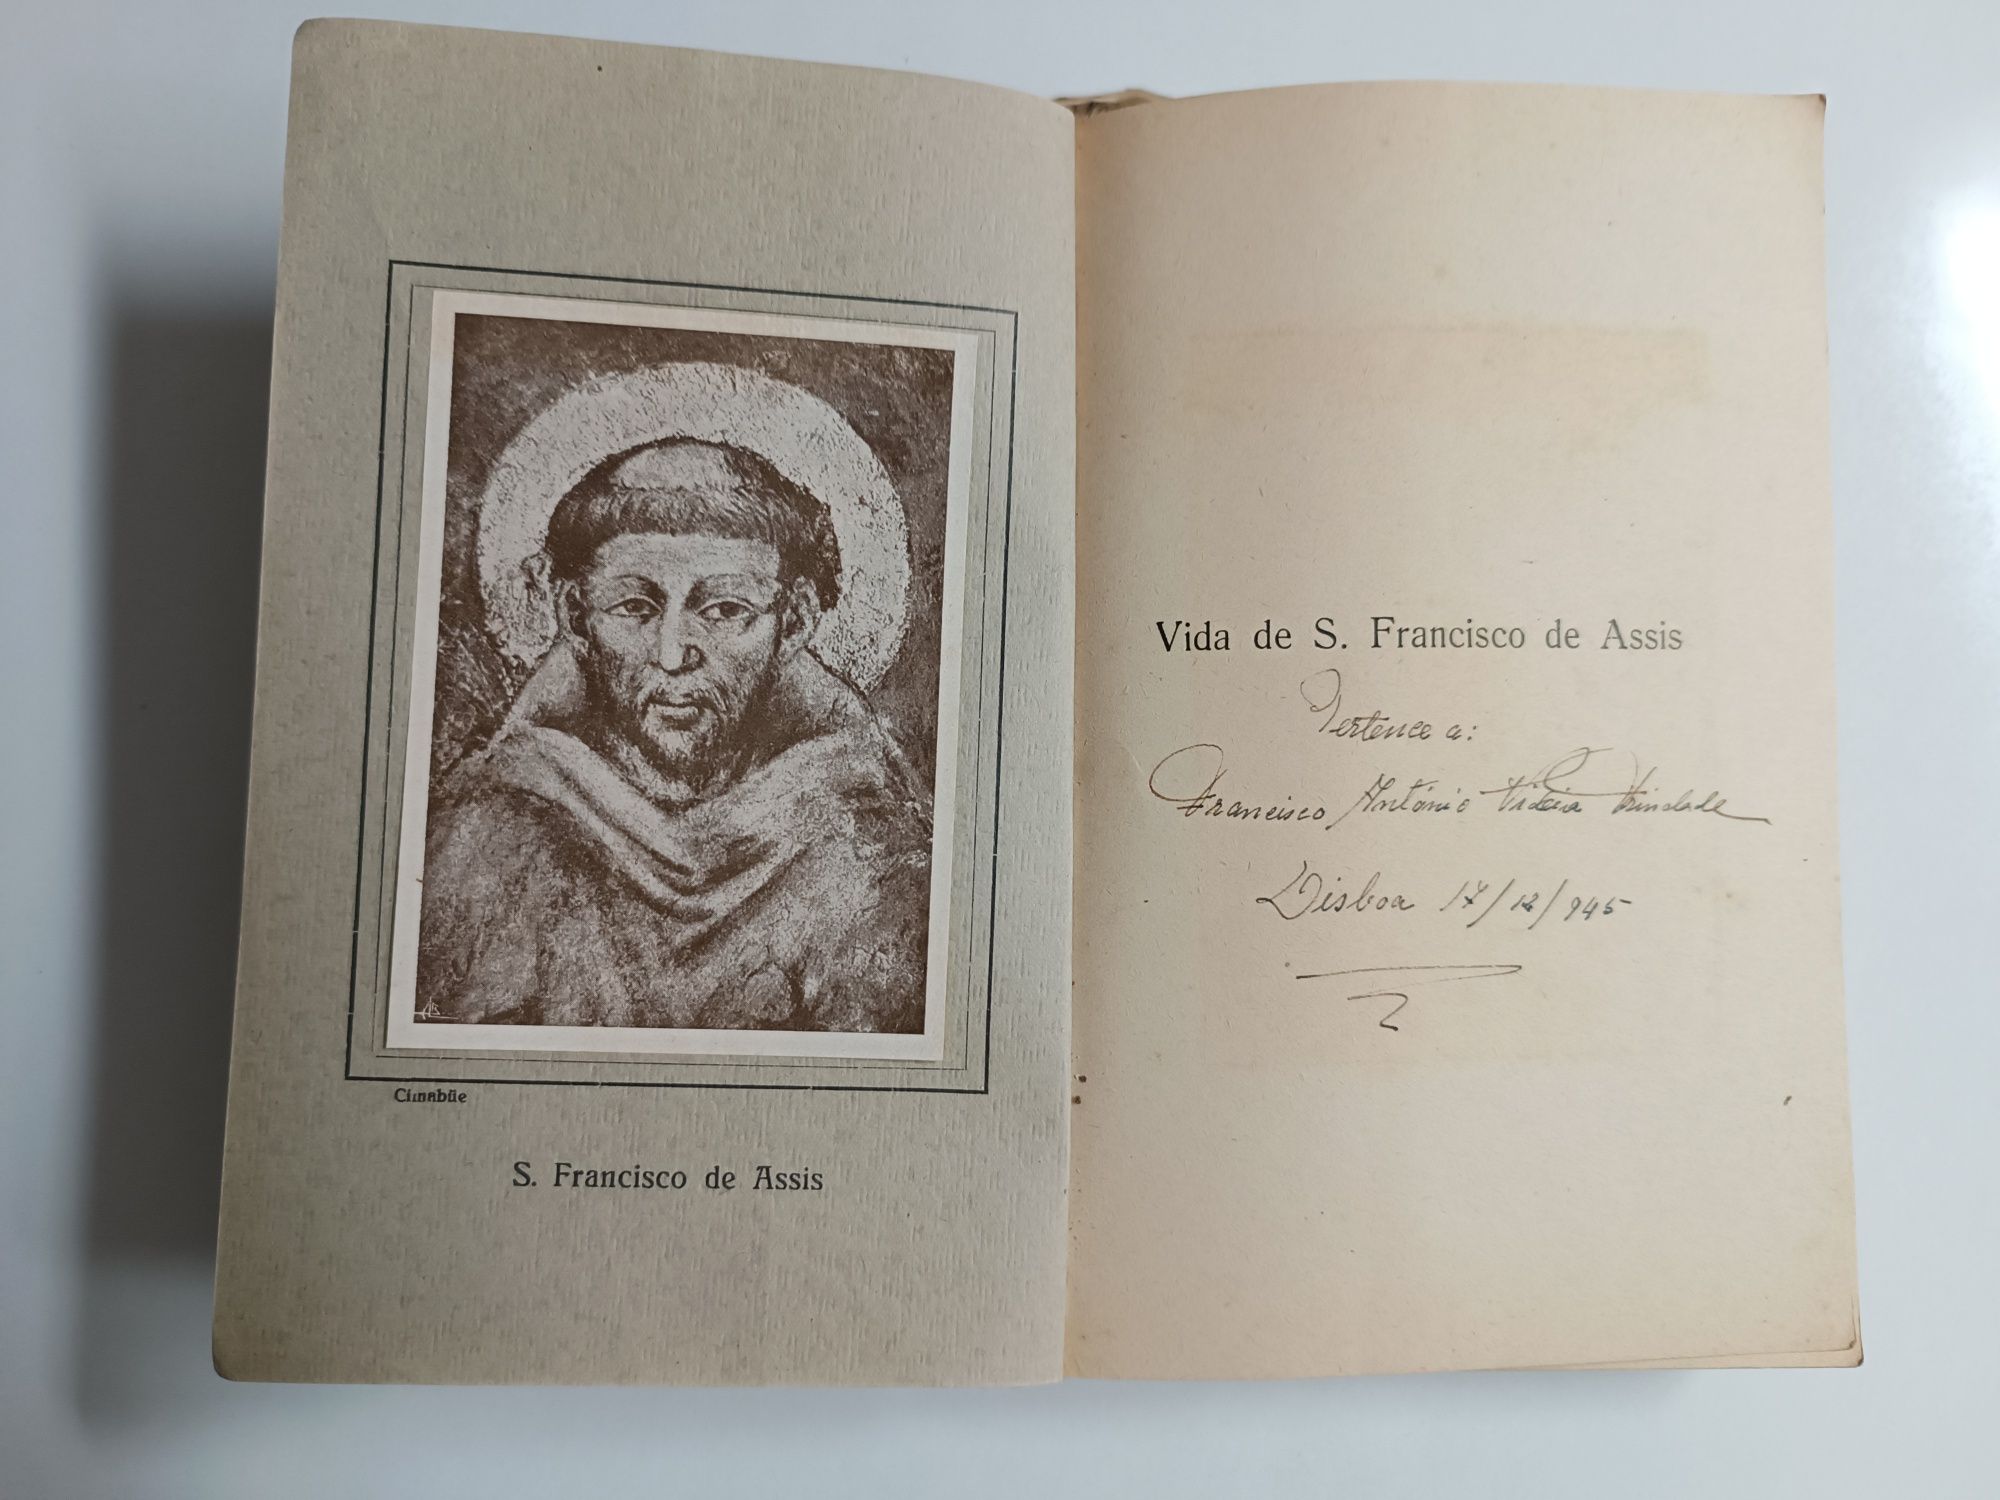 Livro "A Vida de S. Francisco de Assis"